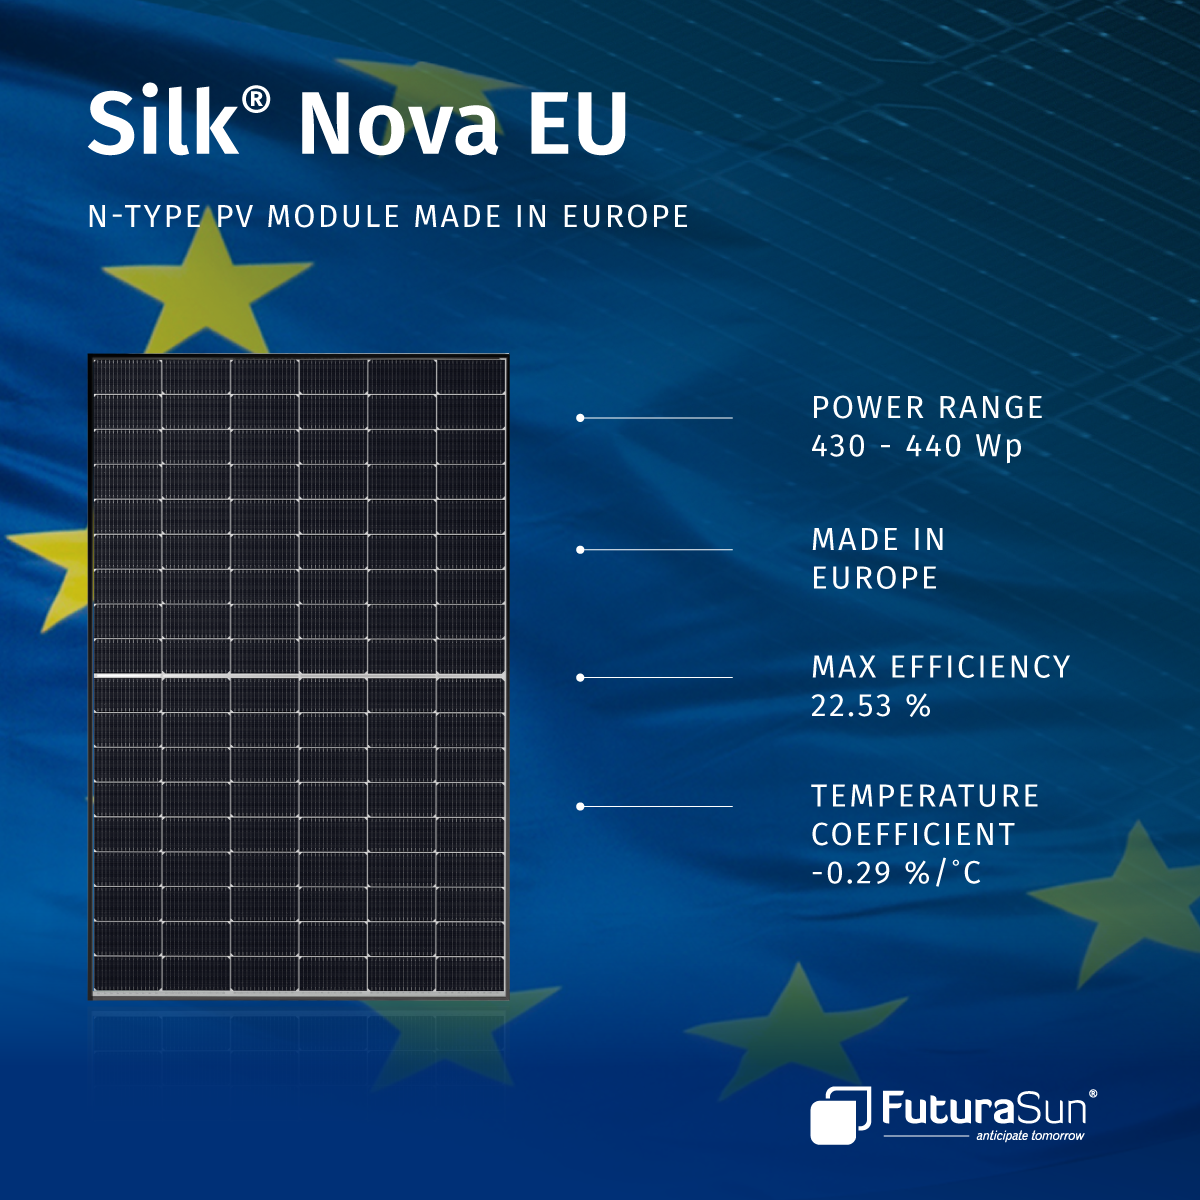 Silk Nova EU